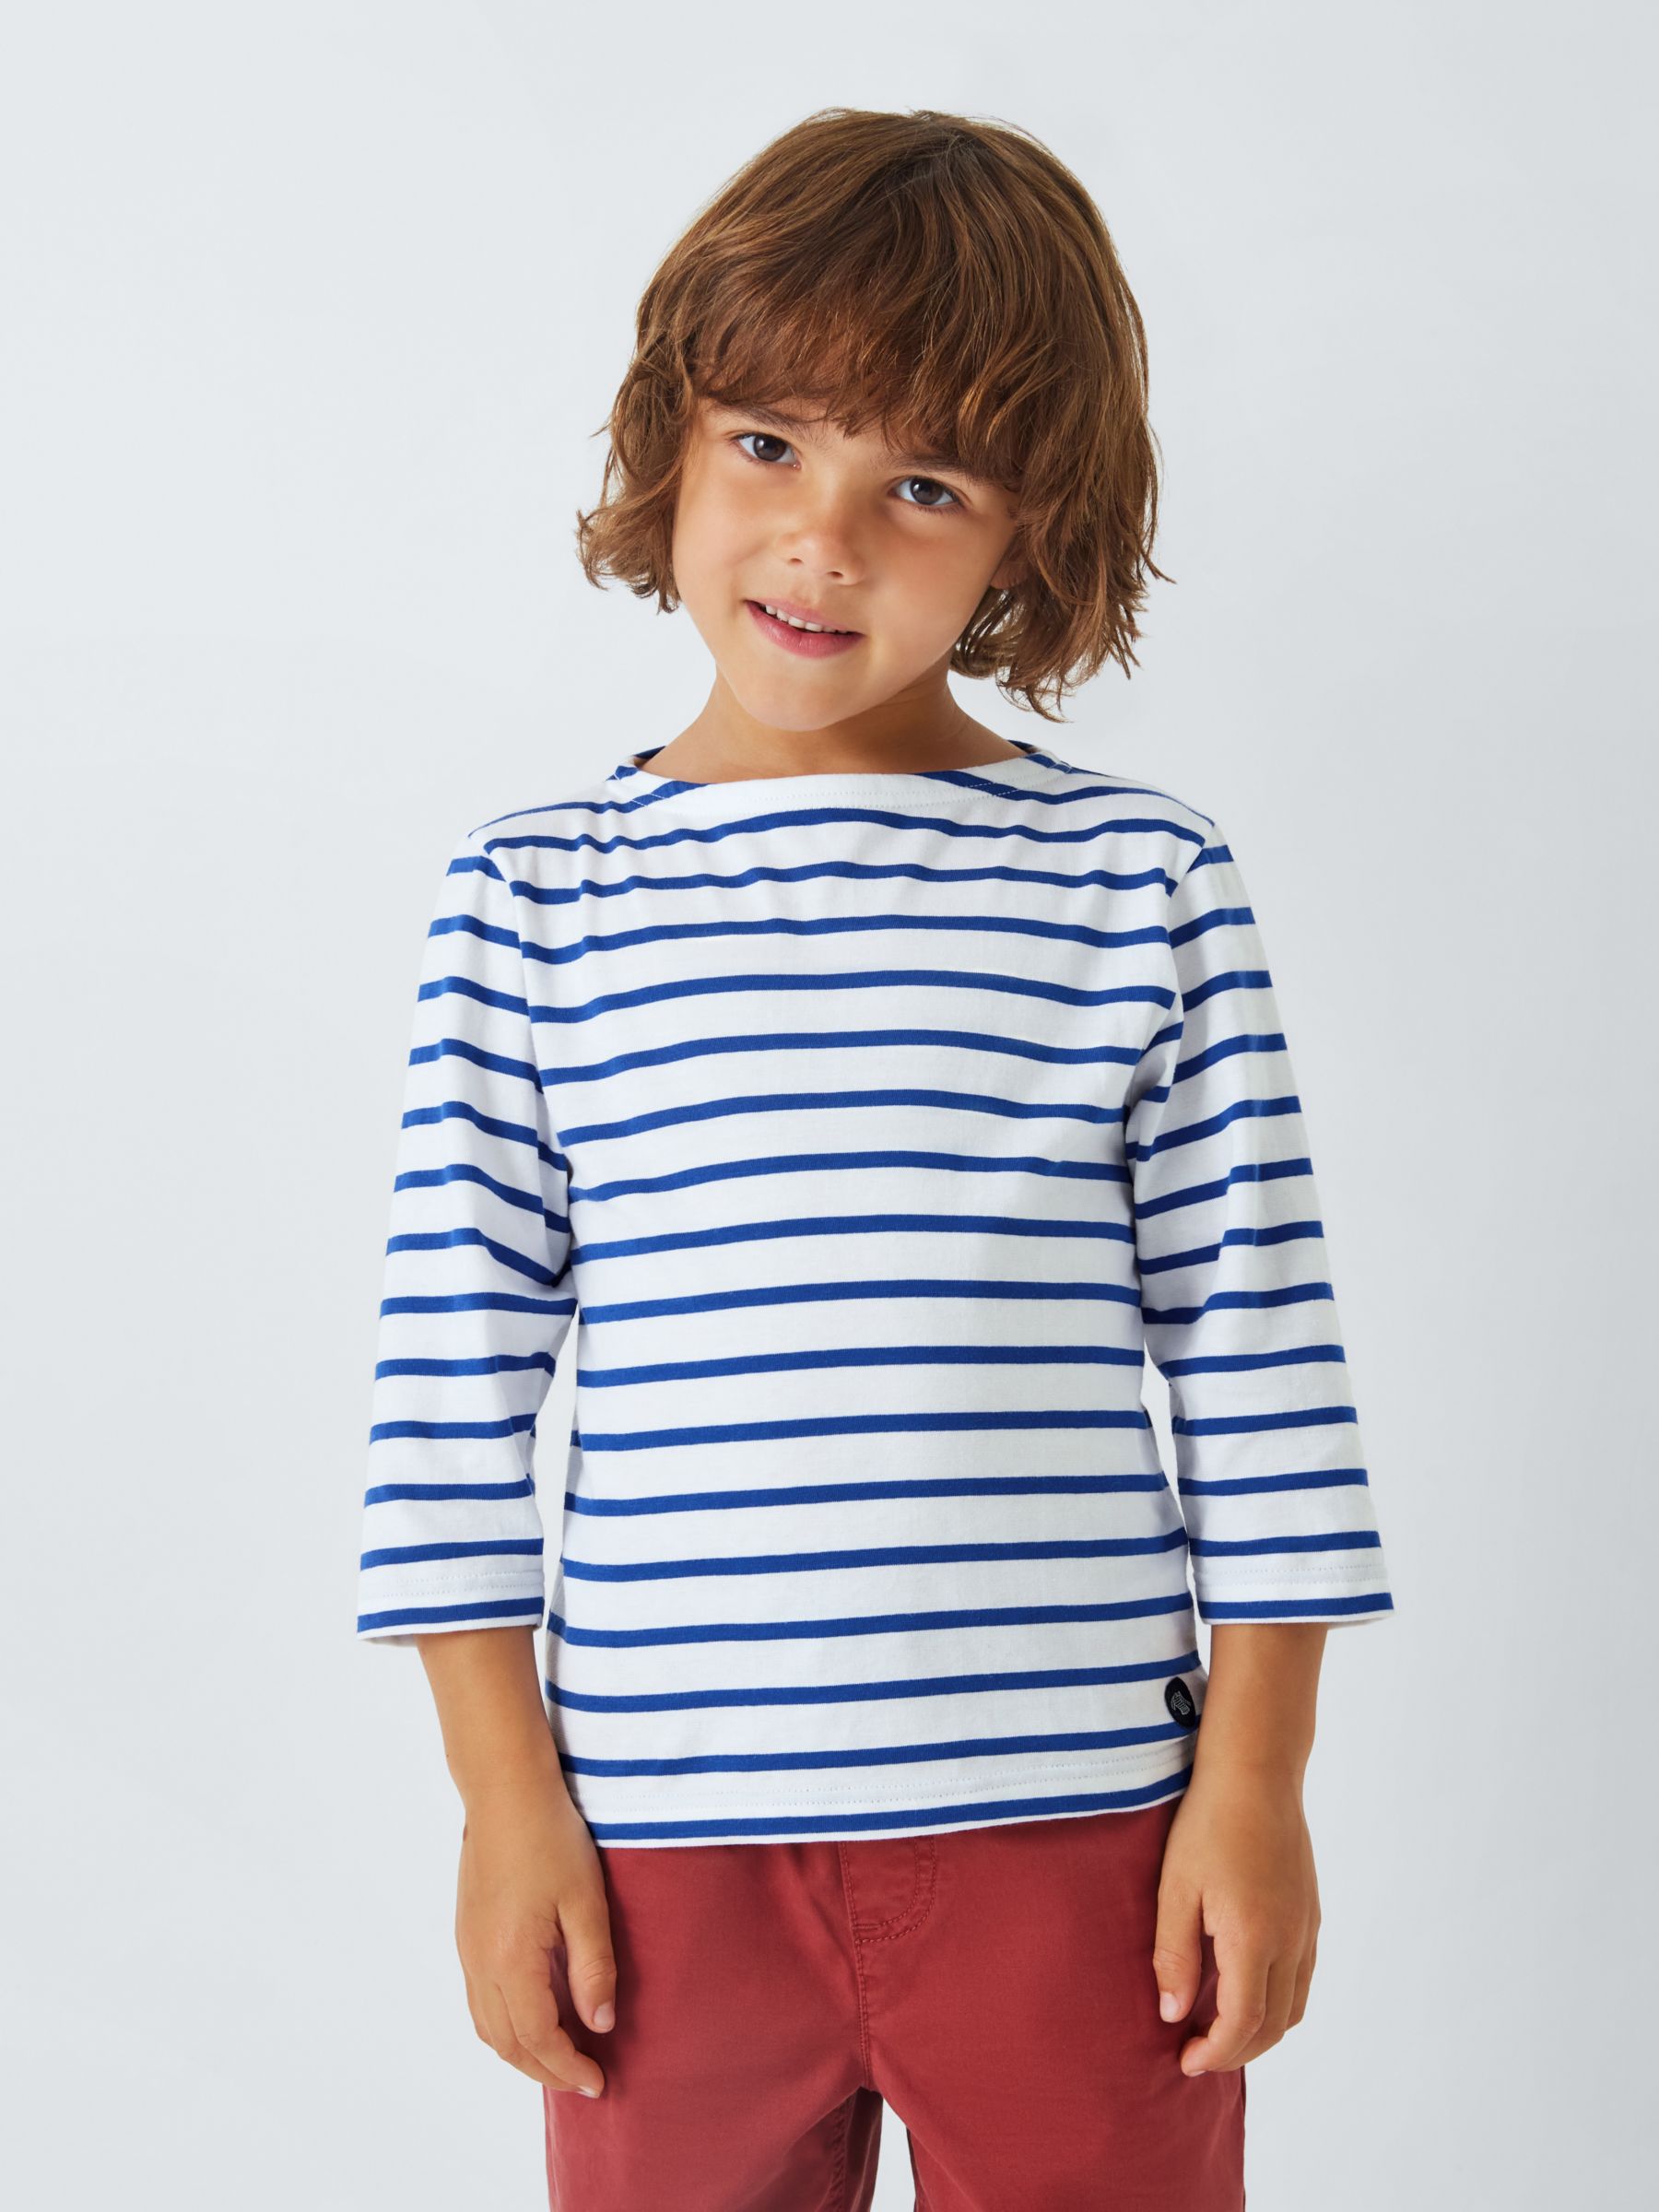 Armor Lux Kids' Long Sleeve 3/4 Stripe Top, Blue/White, 8 years